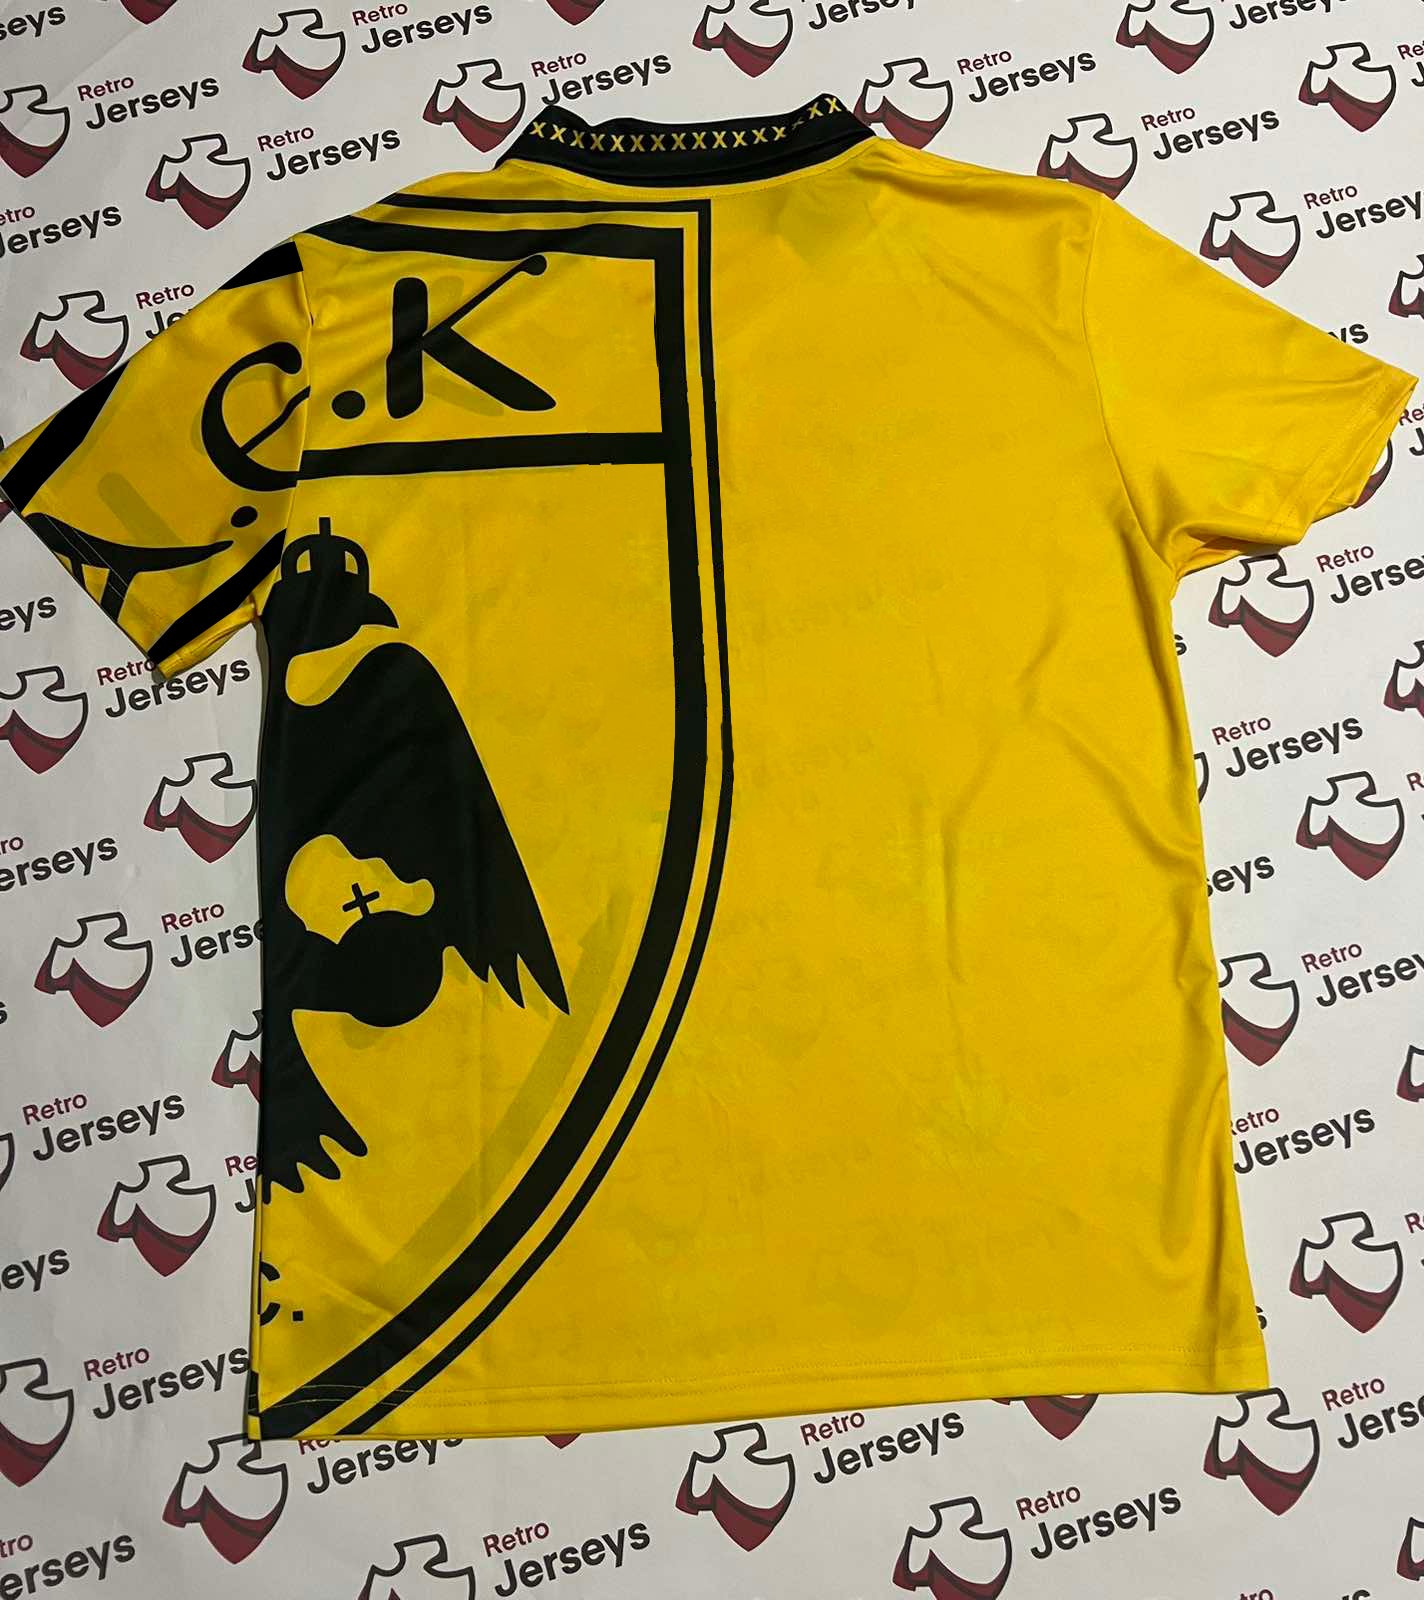 AEK Athens Shirt 1995-1996 Home - Retro Jerseys, φανέλα αεκ - Retro Jerseys